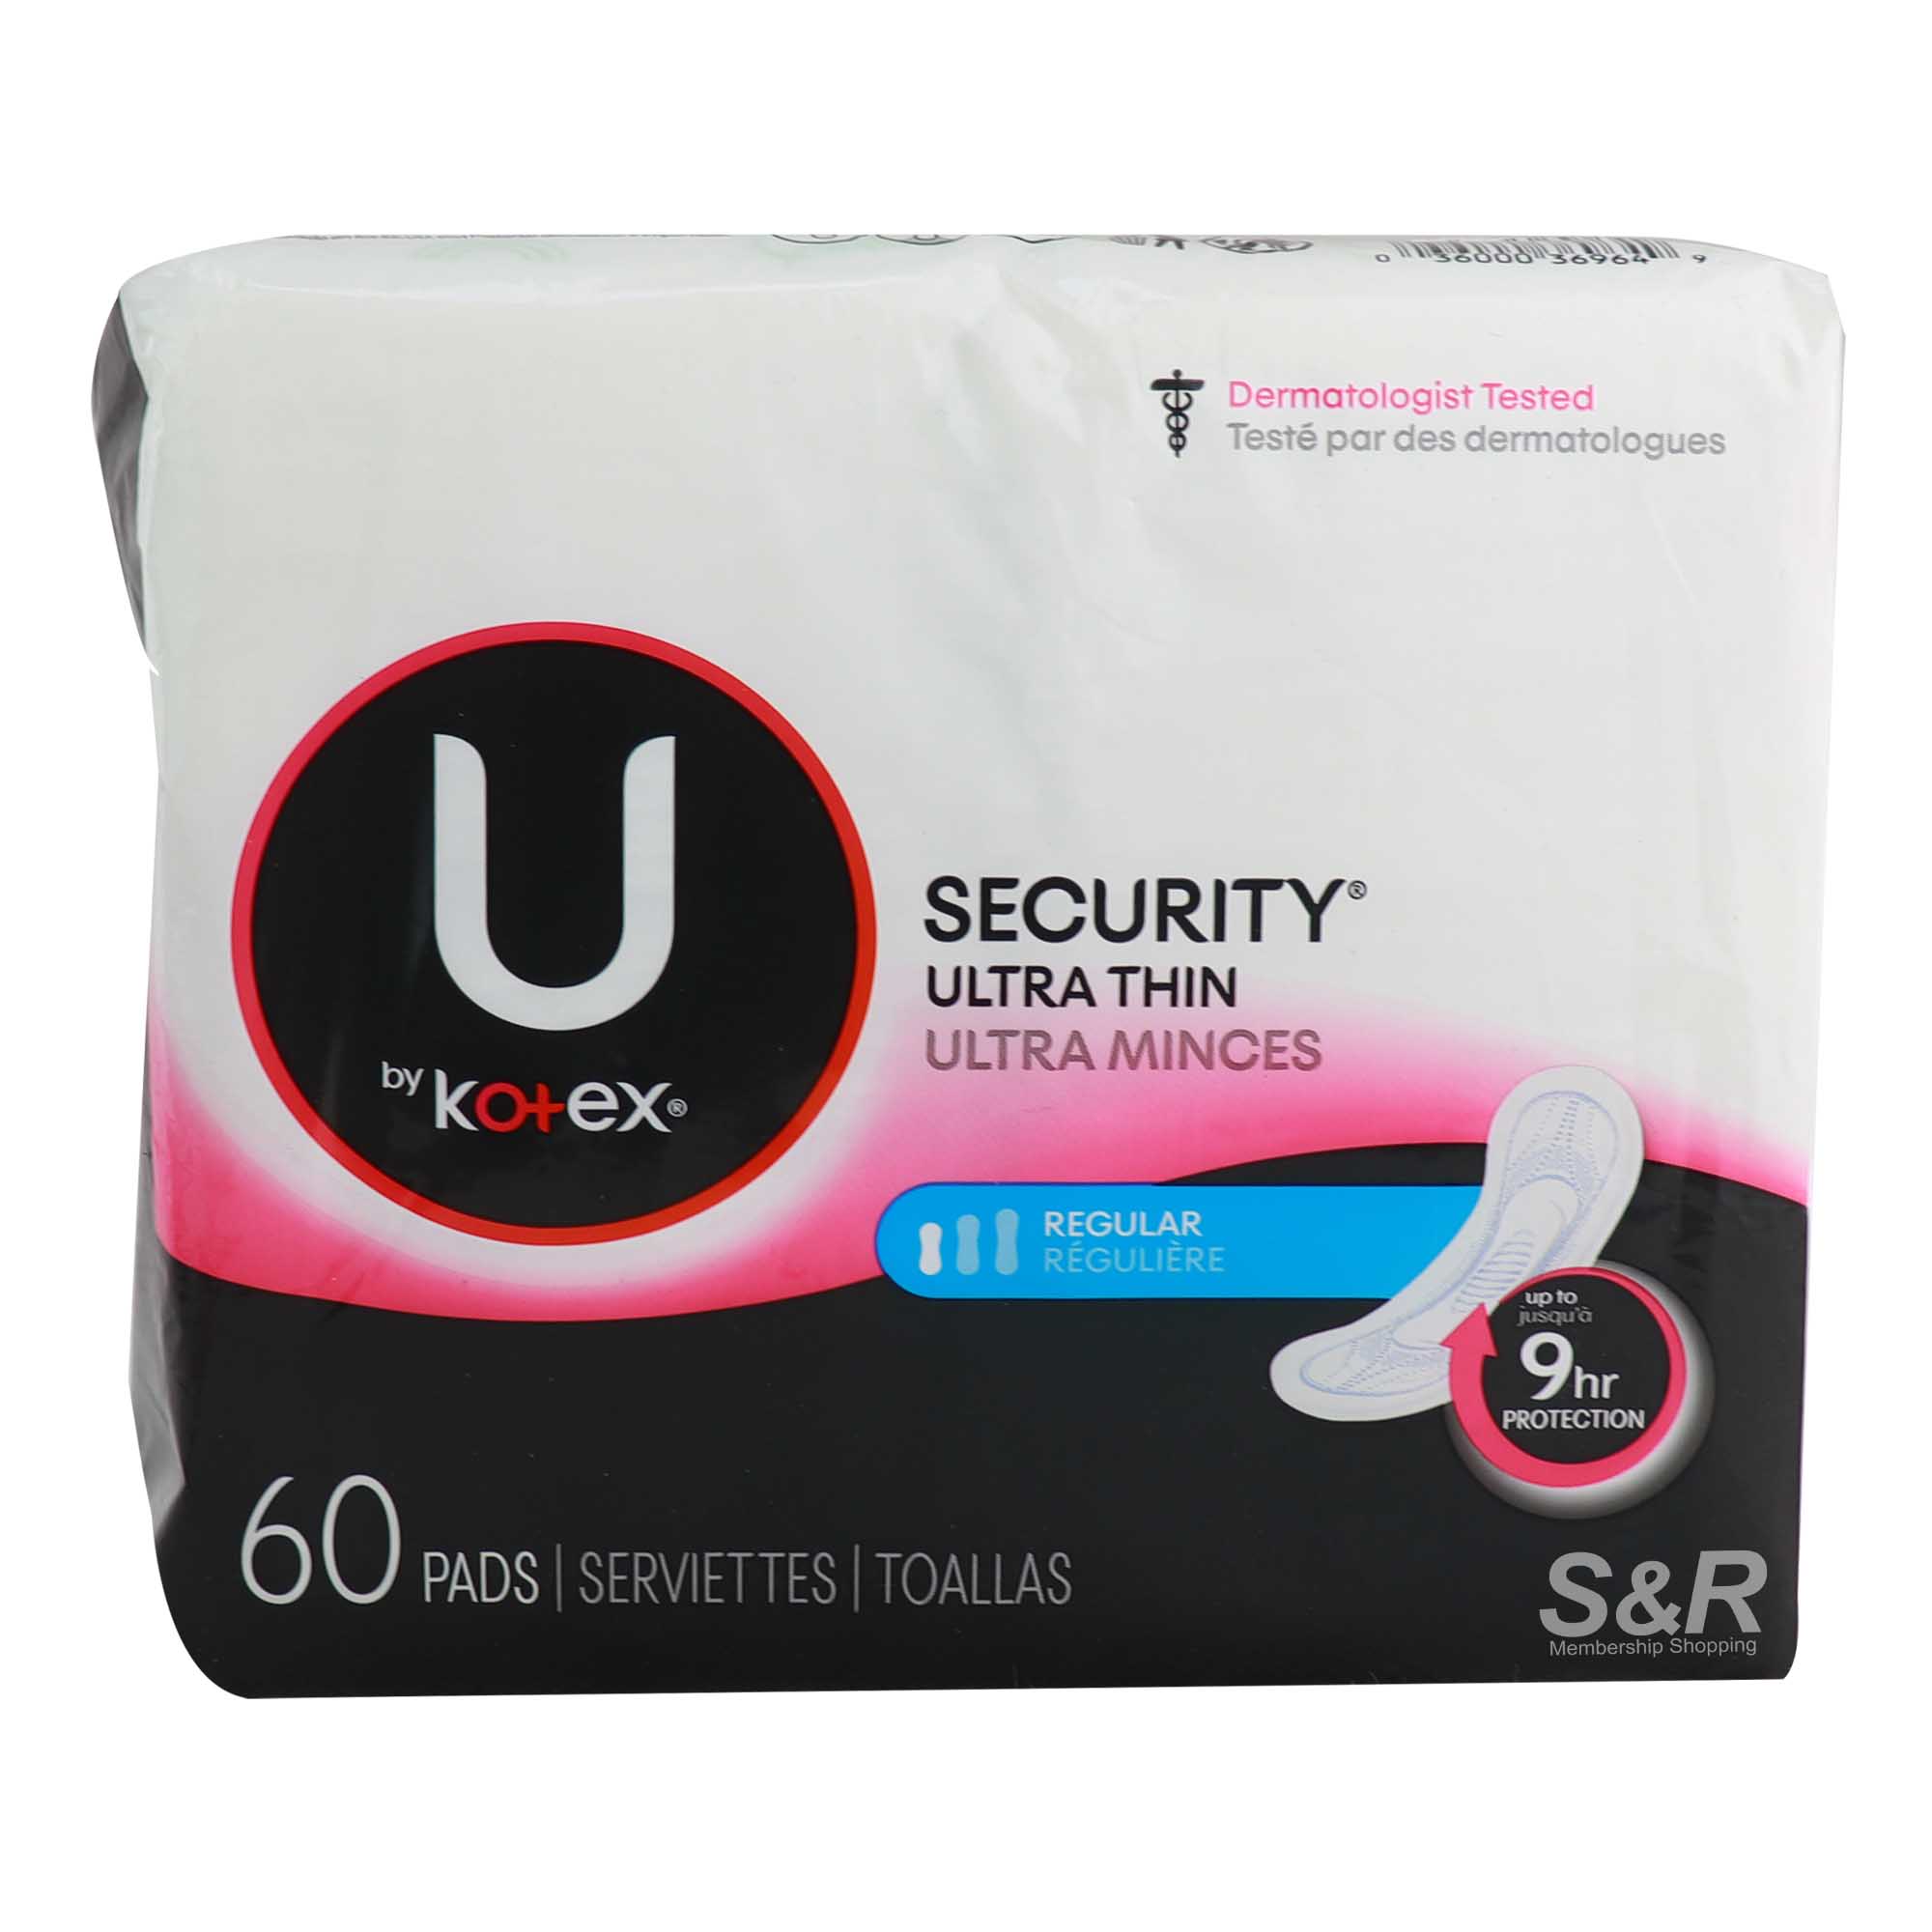 U by Kotex Security Ultra-Thin Regular 60 pads